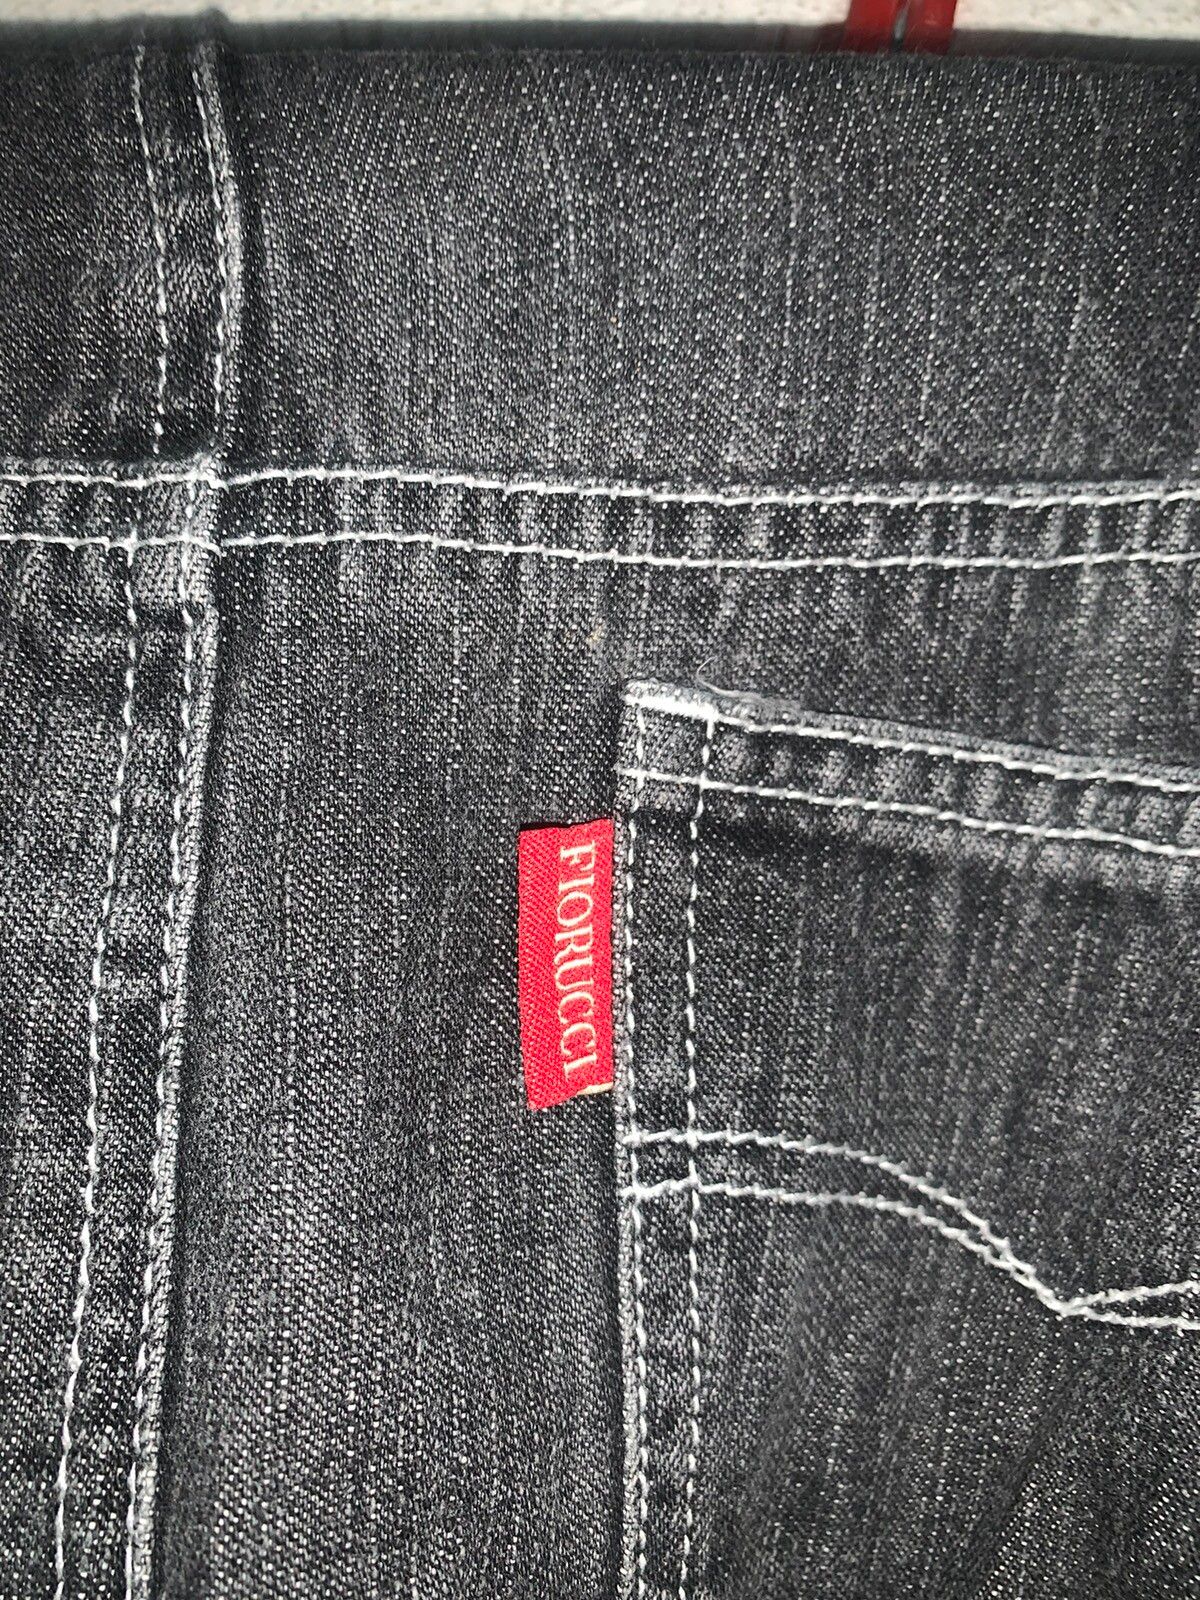 Designer - Fiorucci mini skirt jeans - 5